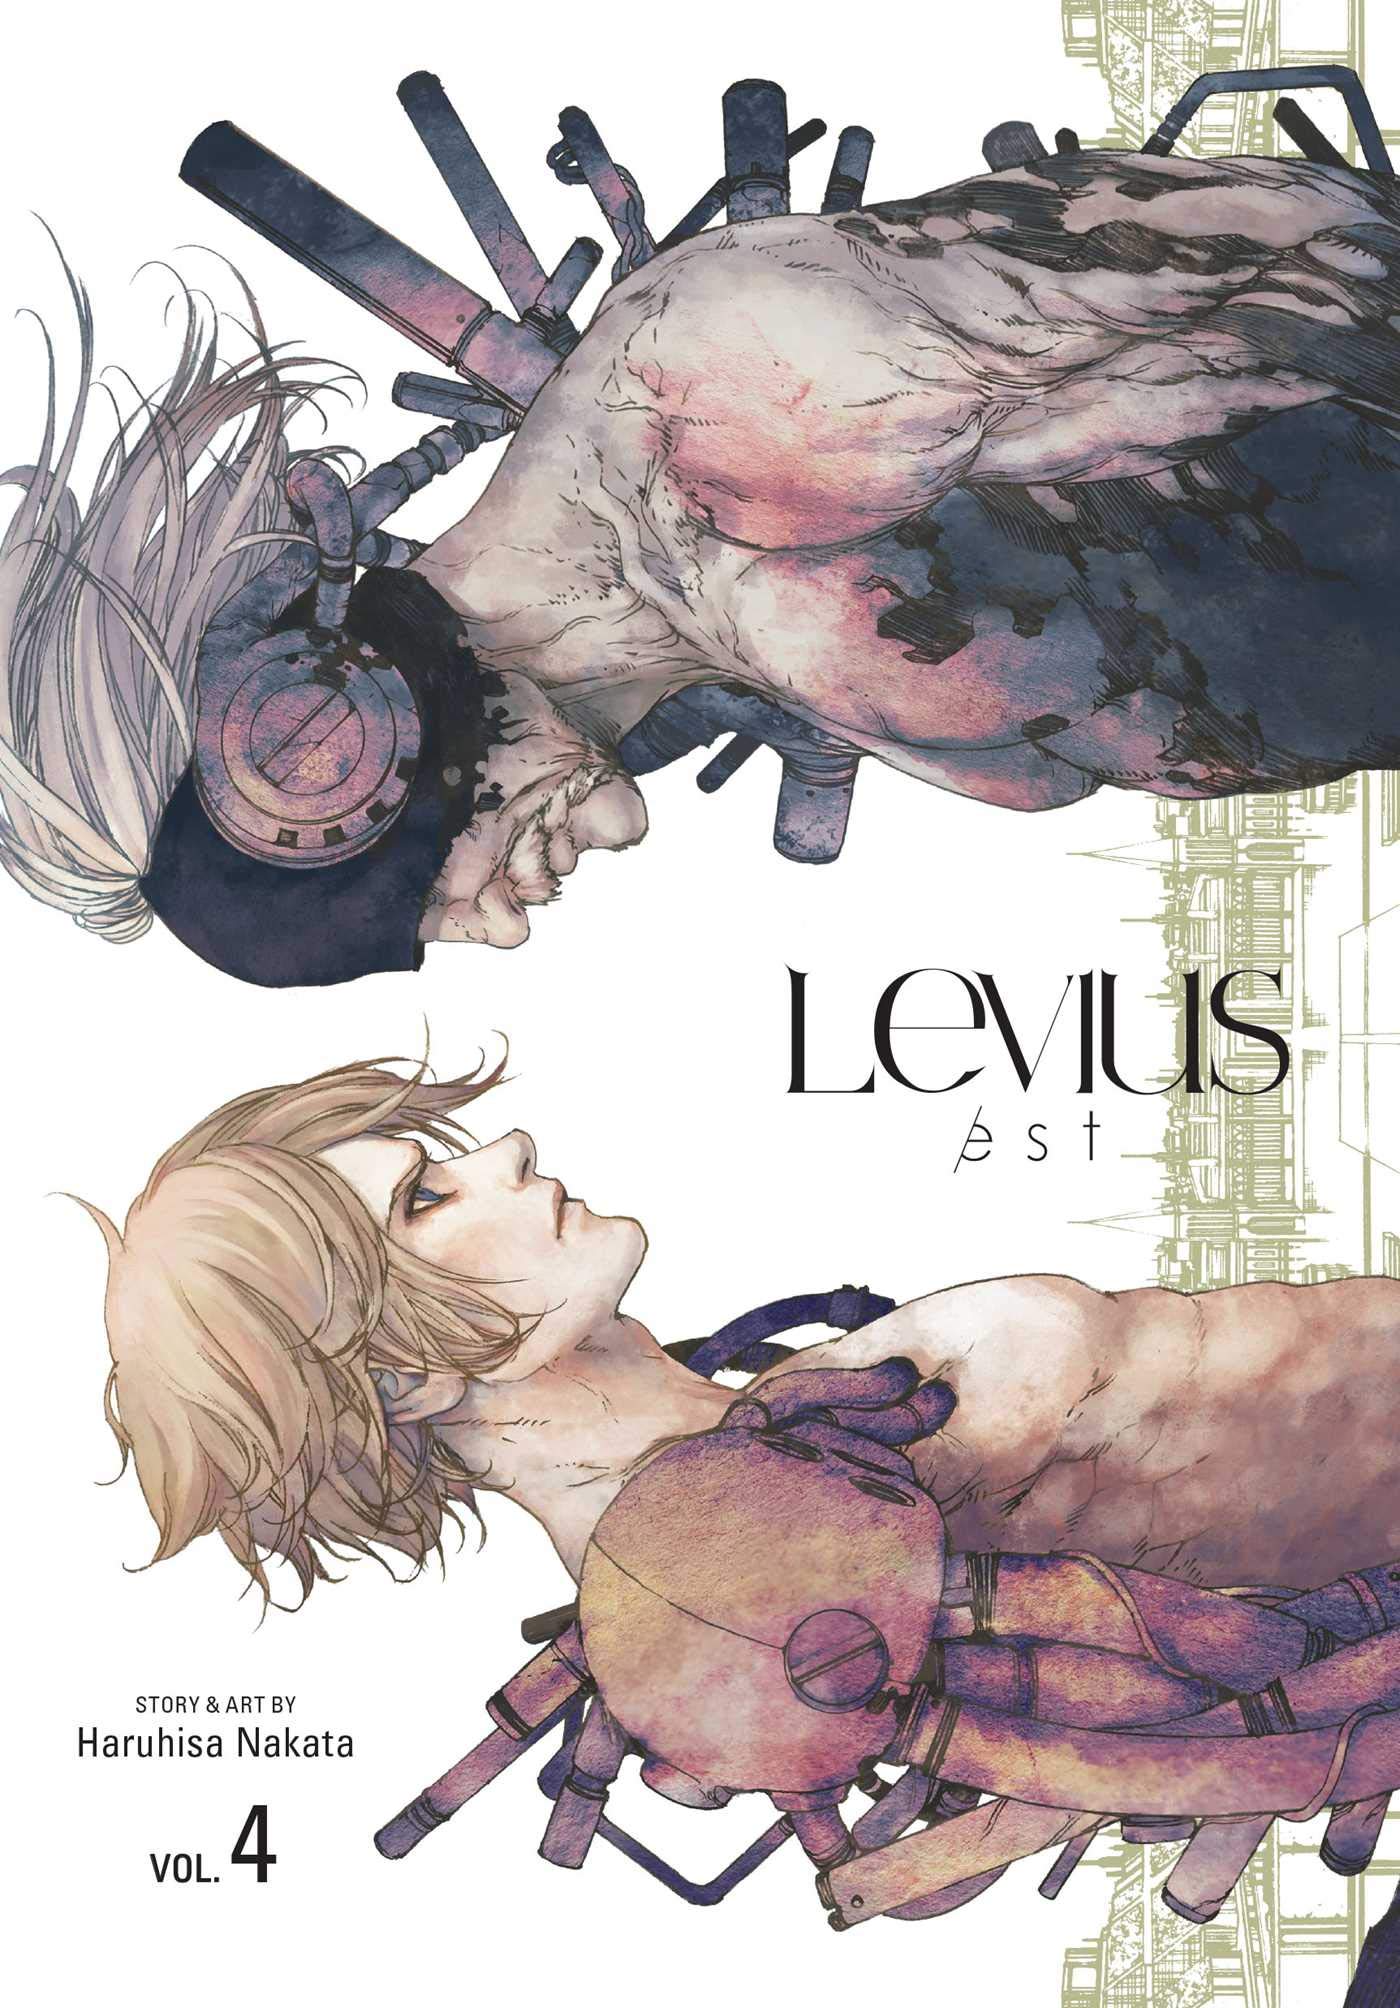 Levius/est - Volume 4 | Haruhisa Nakata